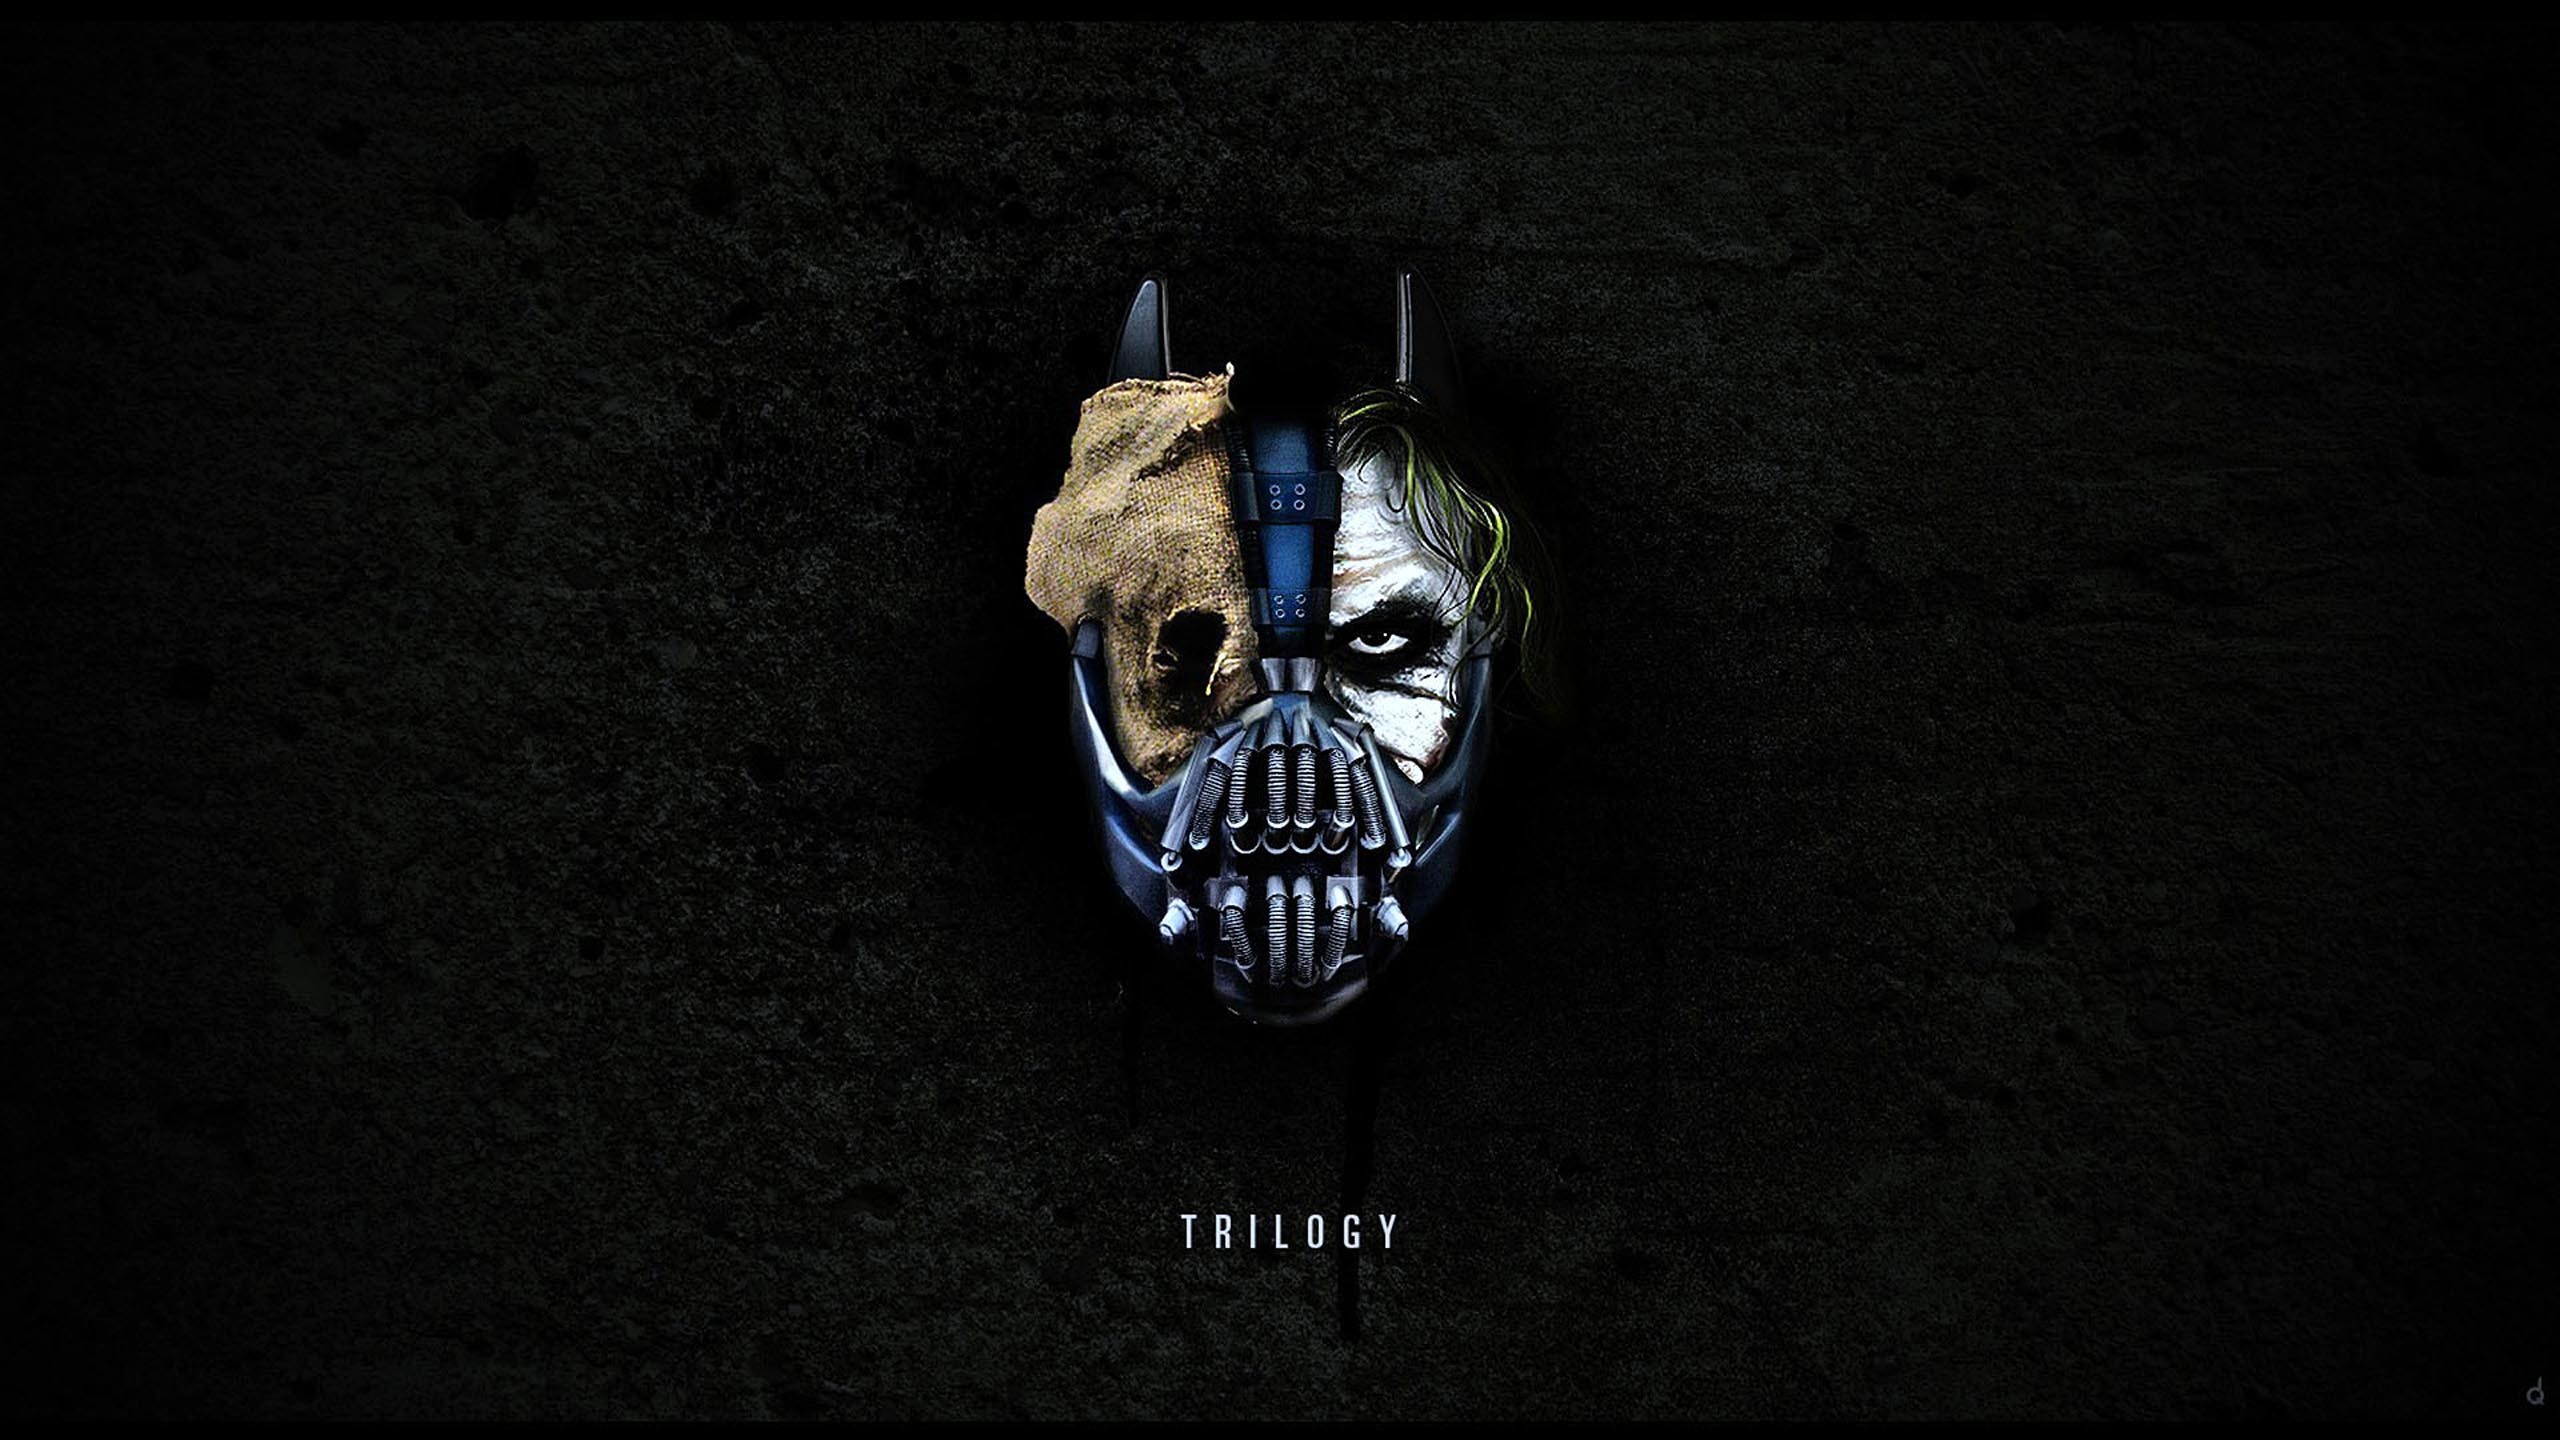 Batman The Dark Knight The Dark Knight Rises Joker Heath Ledger Bane Mask Trilogy 2560x1440